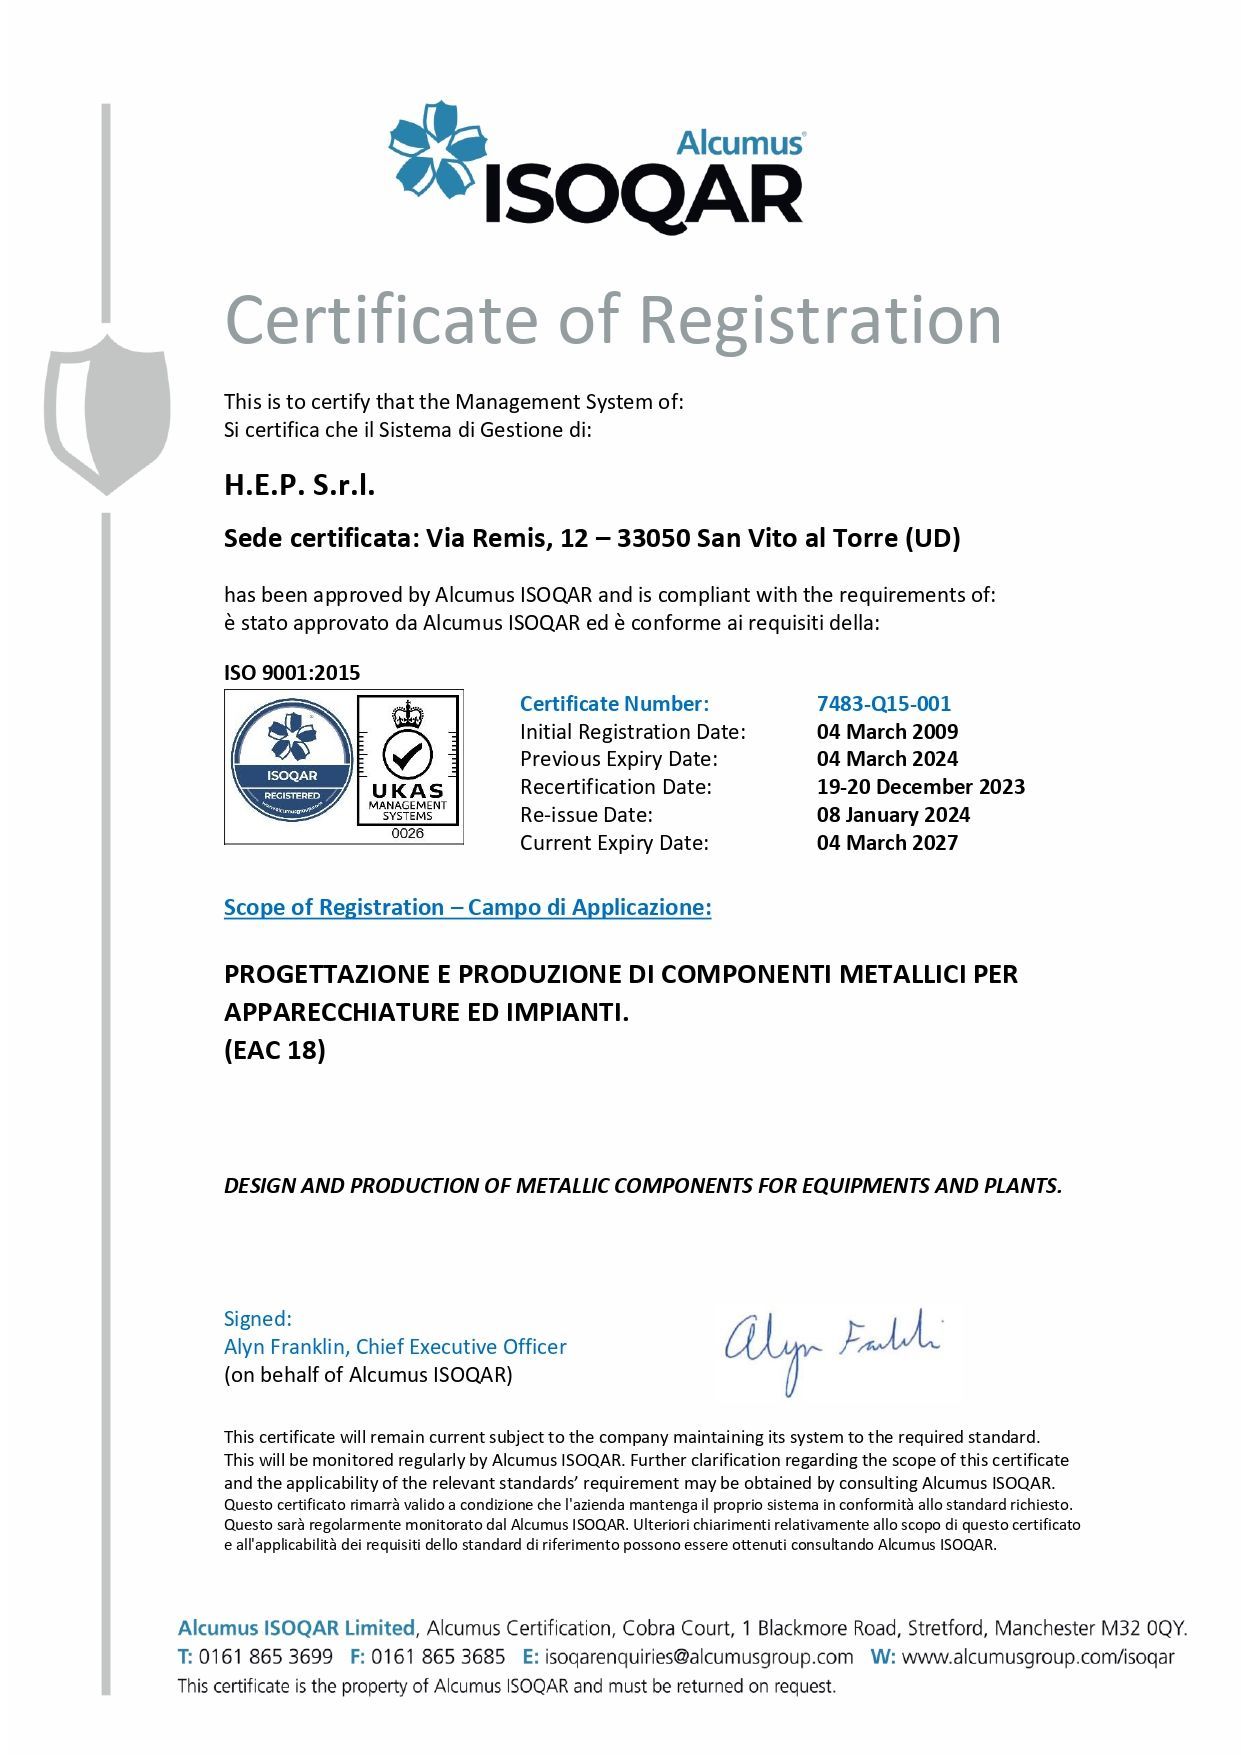 ISOQAR-Zertifizierung